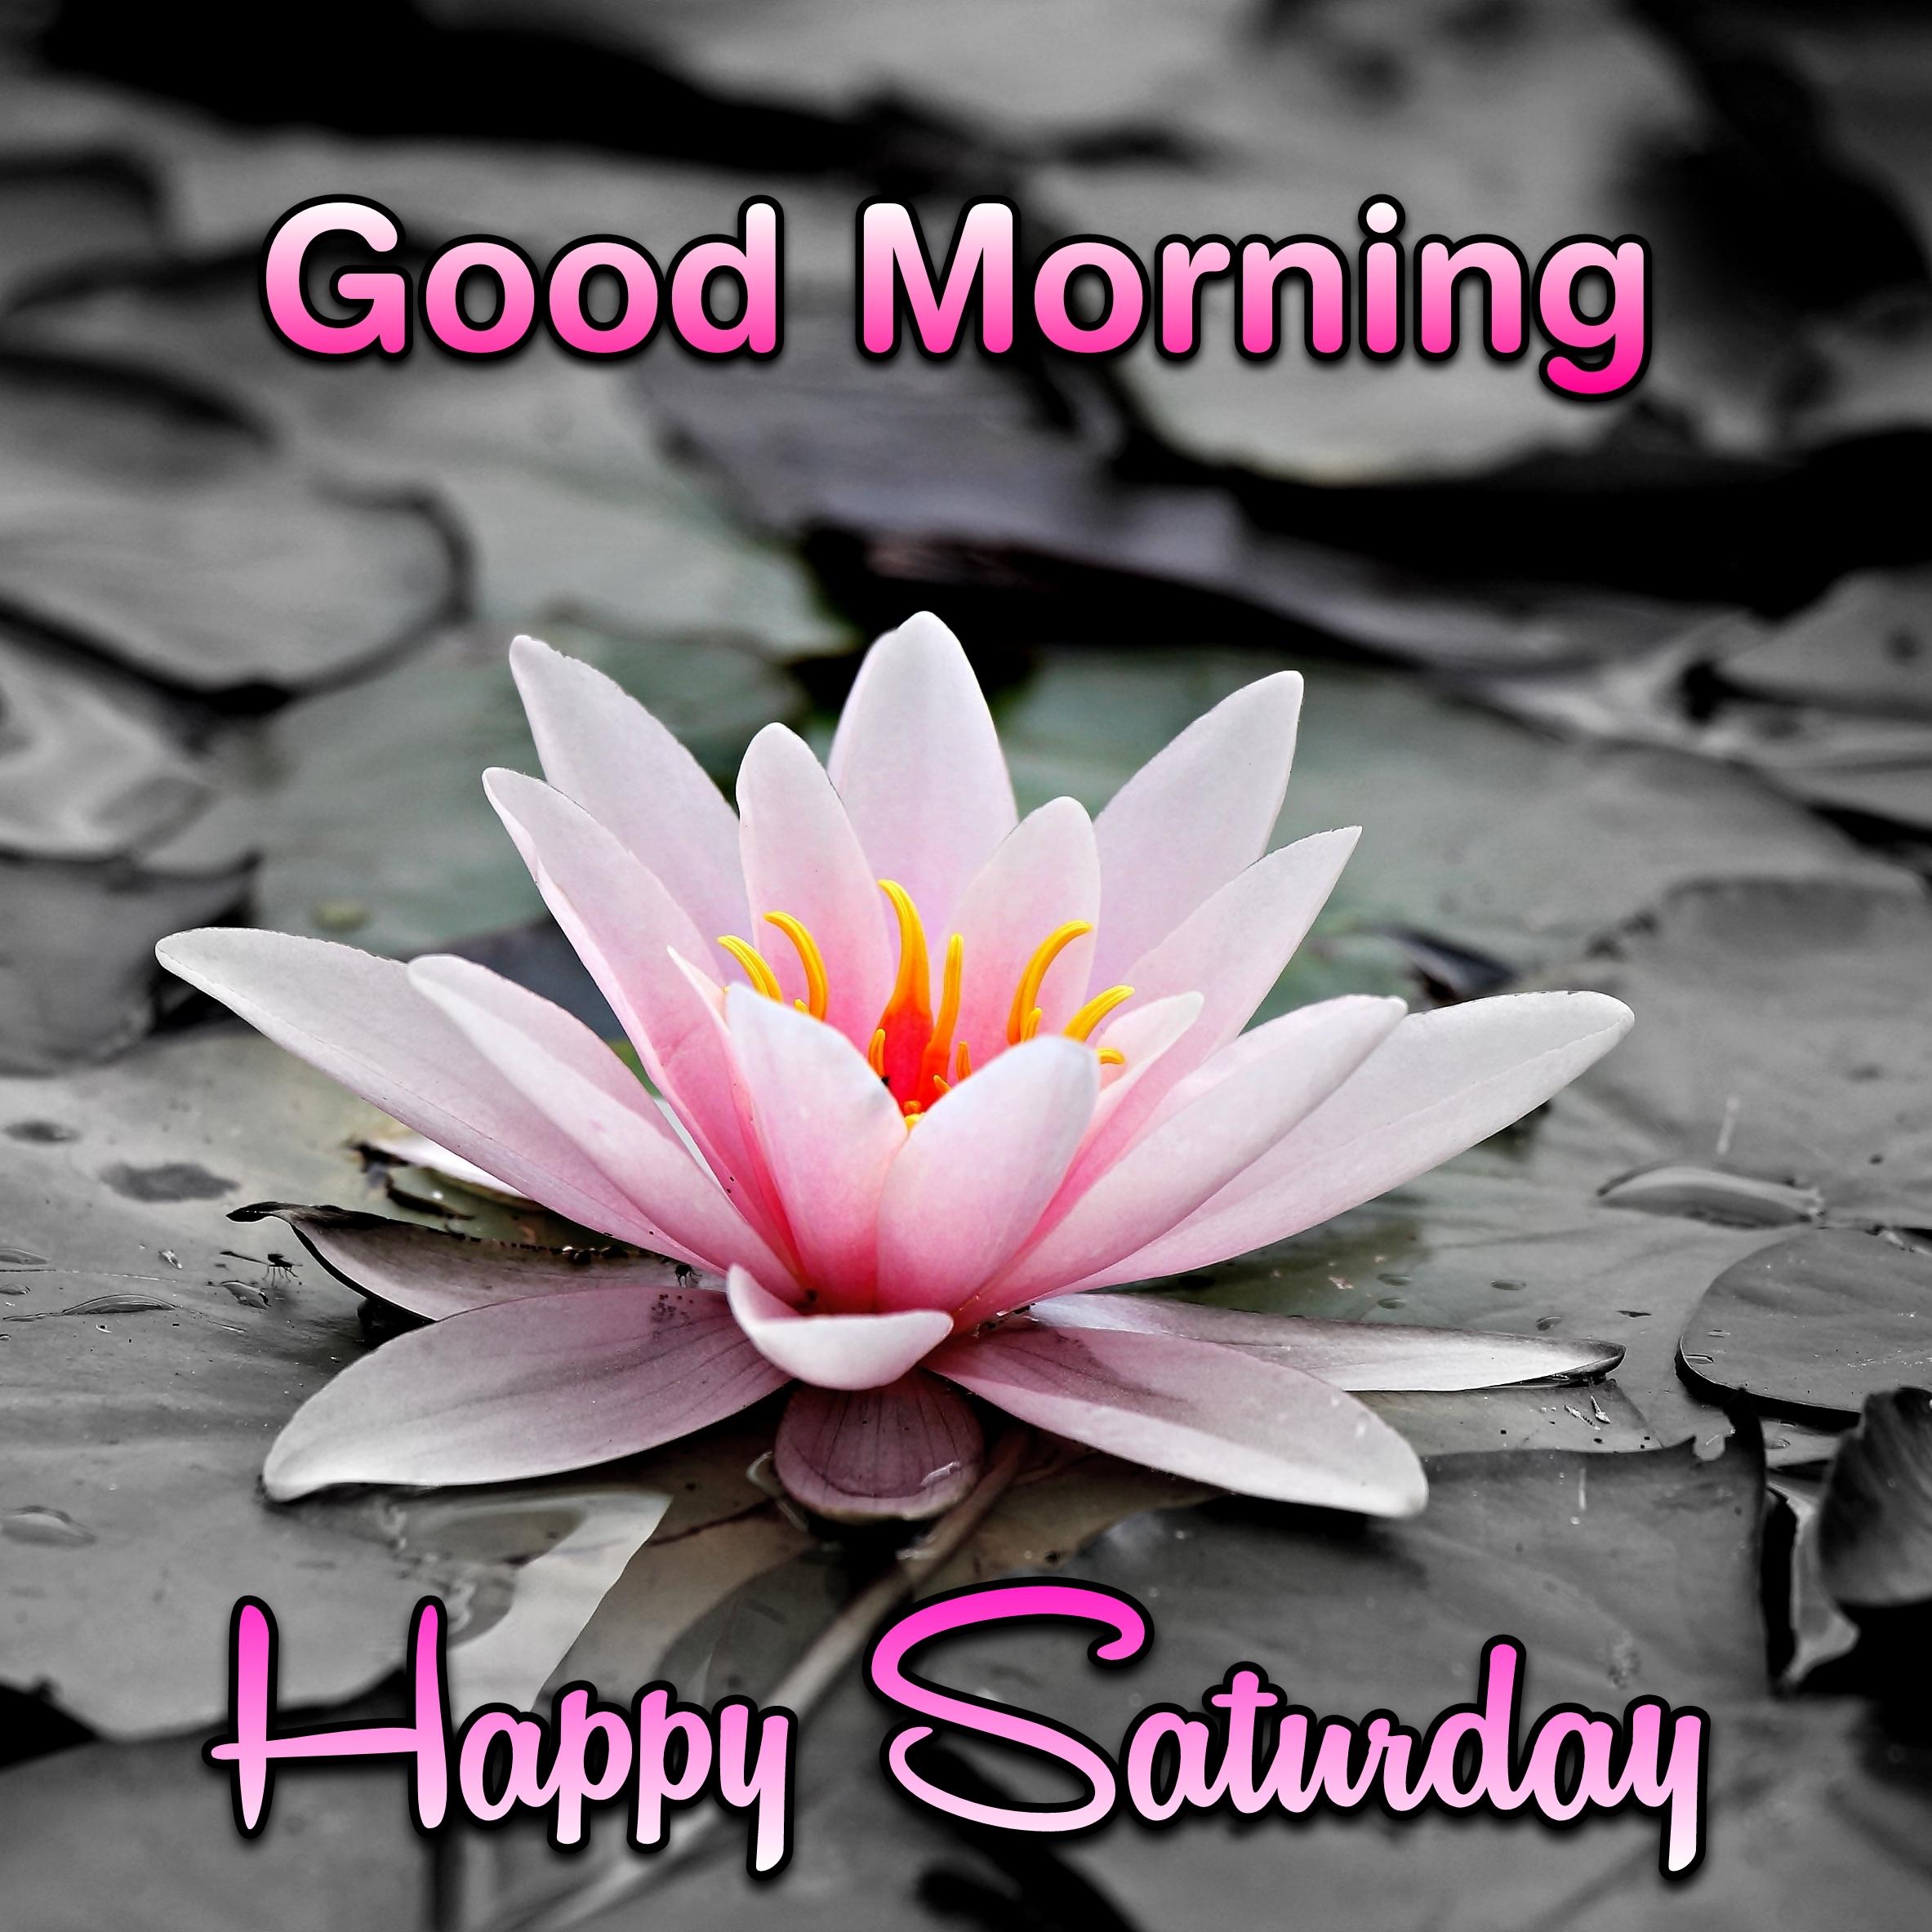 Good Morning Happy Saturday Lotus Flower Images